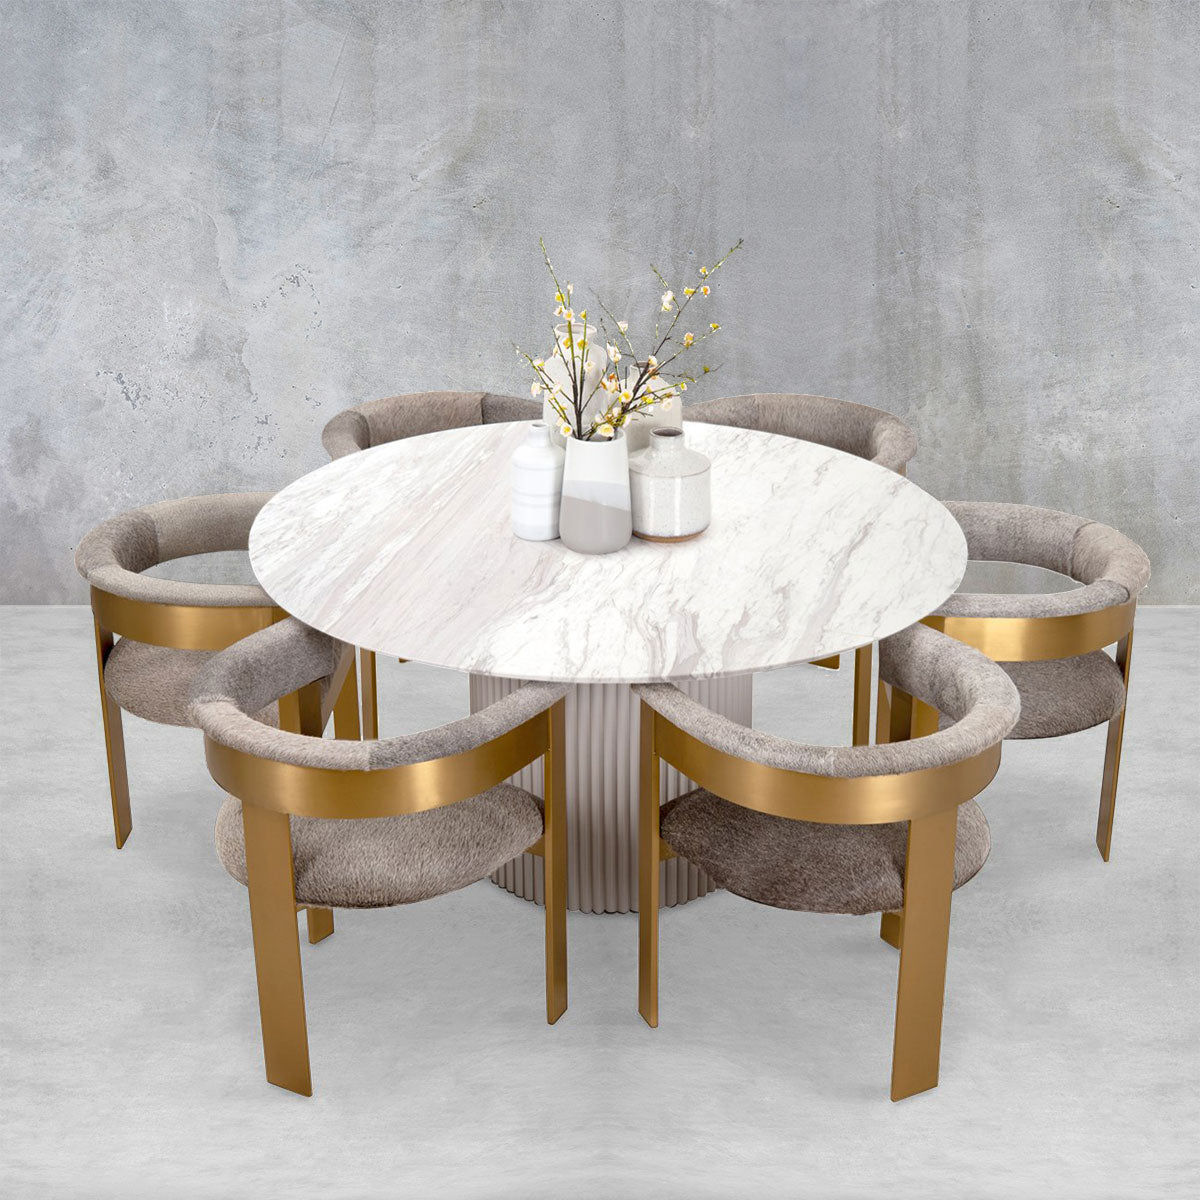 Ubud Round Dining Table